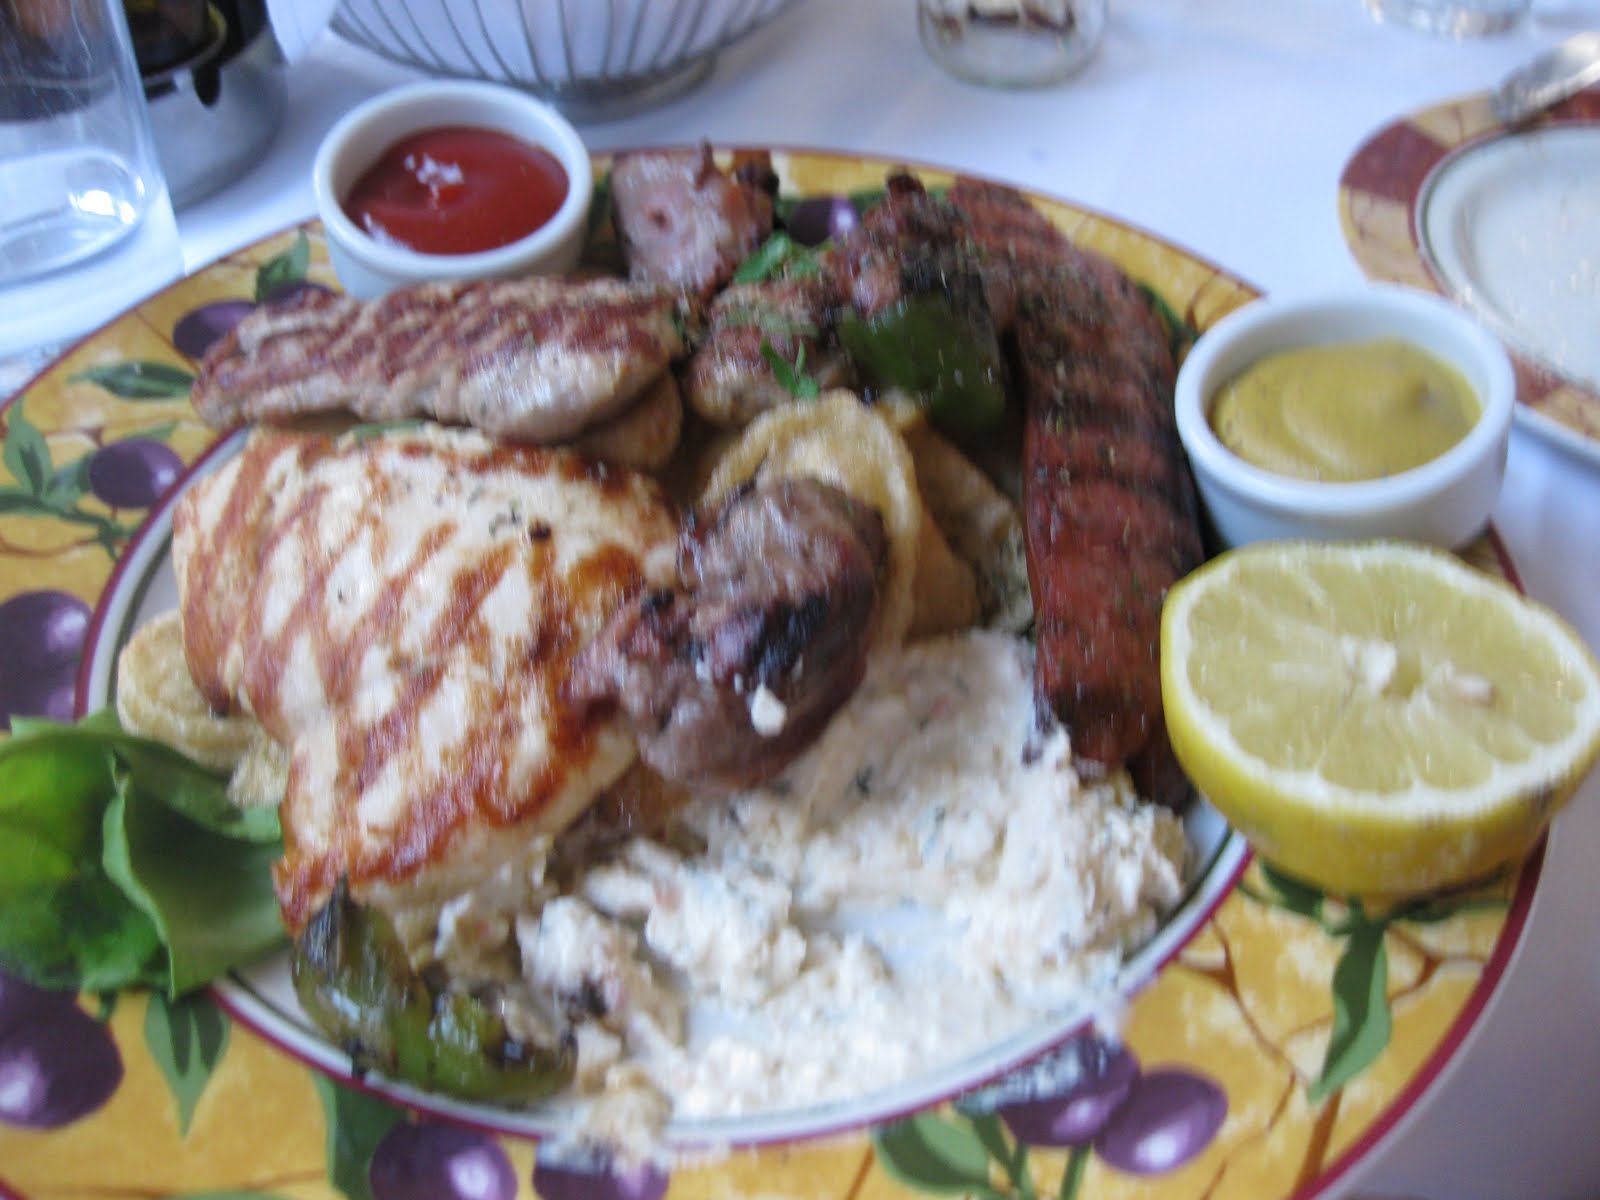 Mid-Atlantic Martha: Foodie Friday - A taste of Greece